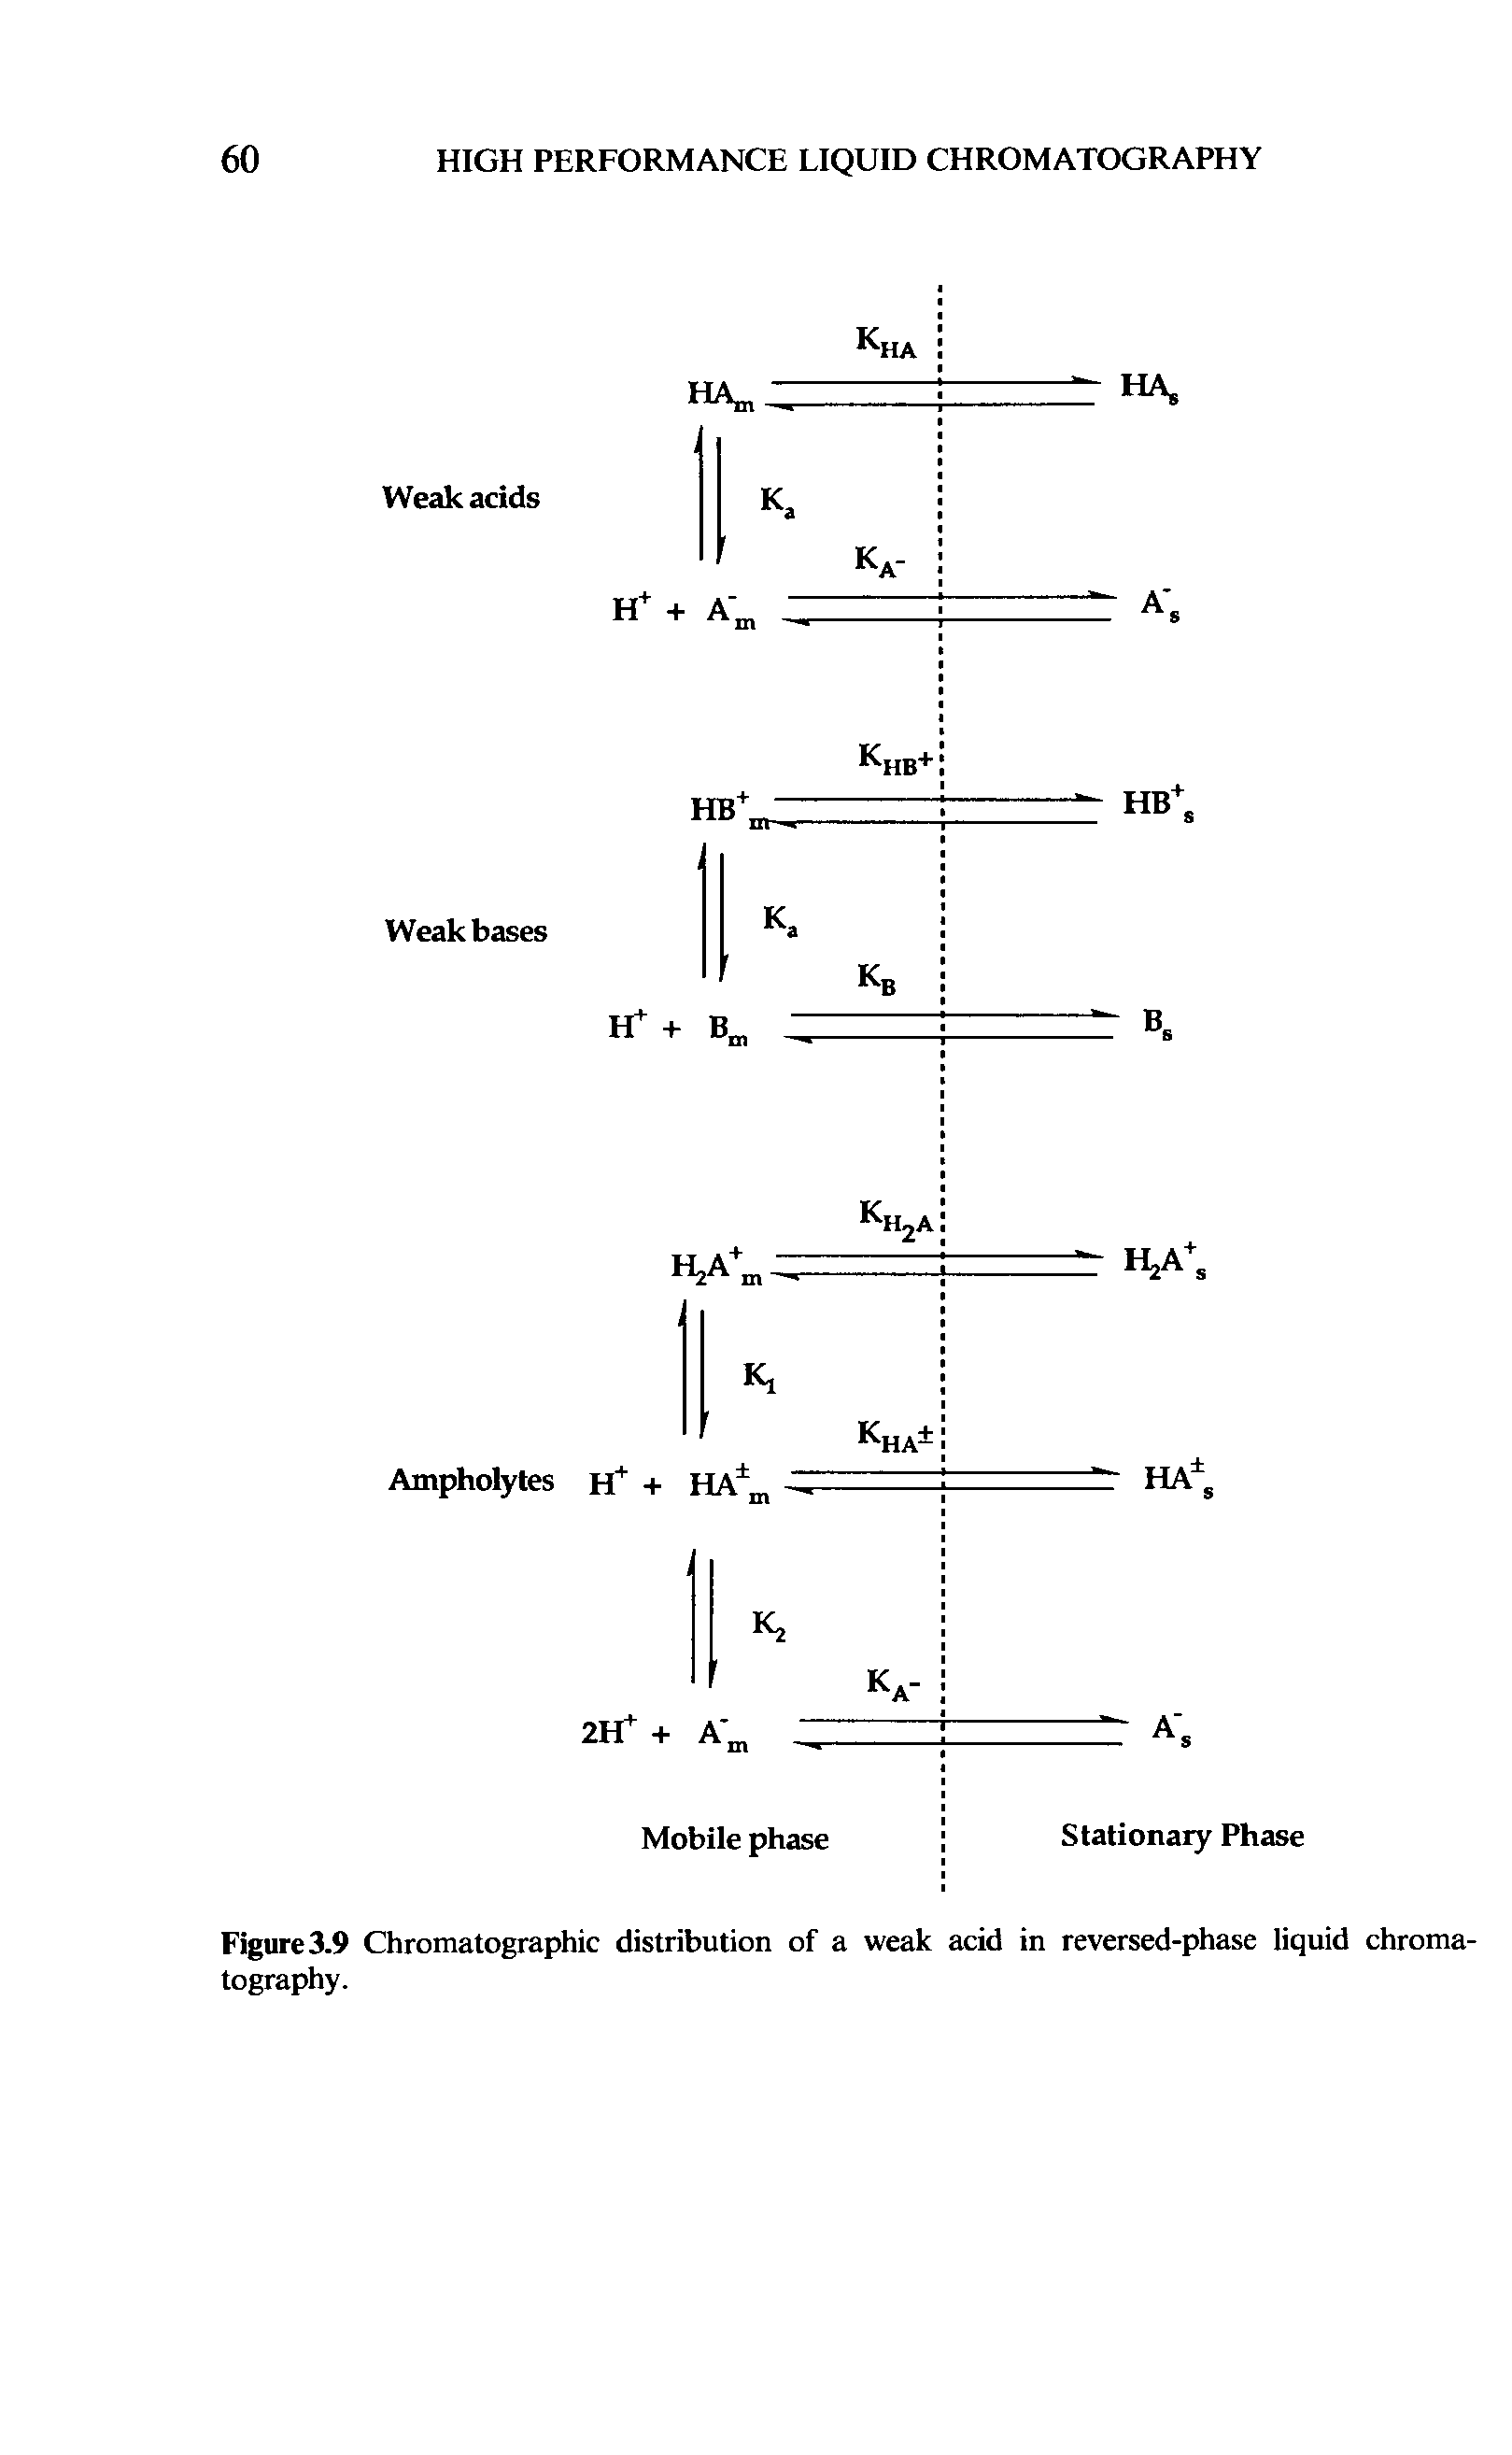 Figure 3.9 Chromatographic distribution of a weak acid in reversed-phase liquid chromatography.